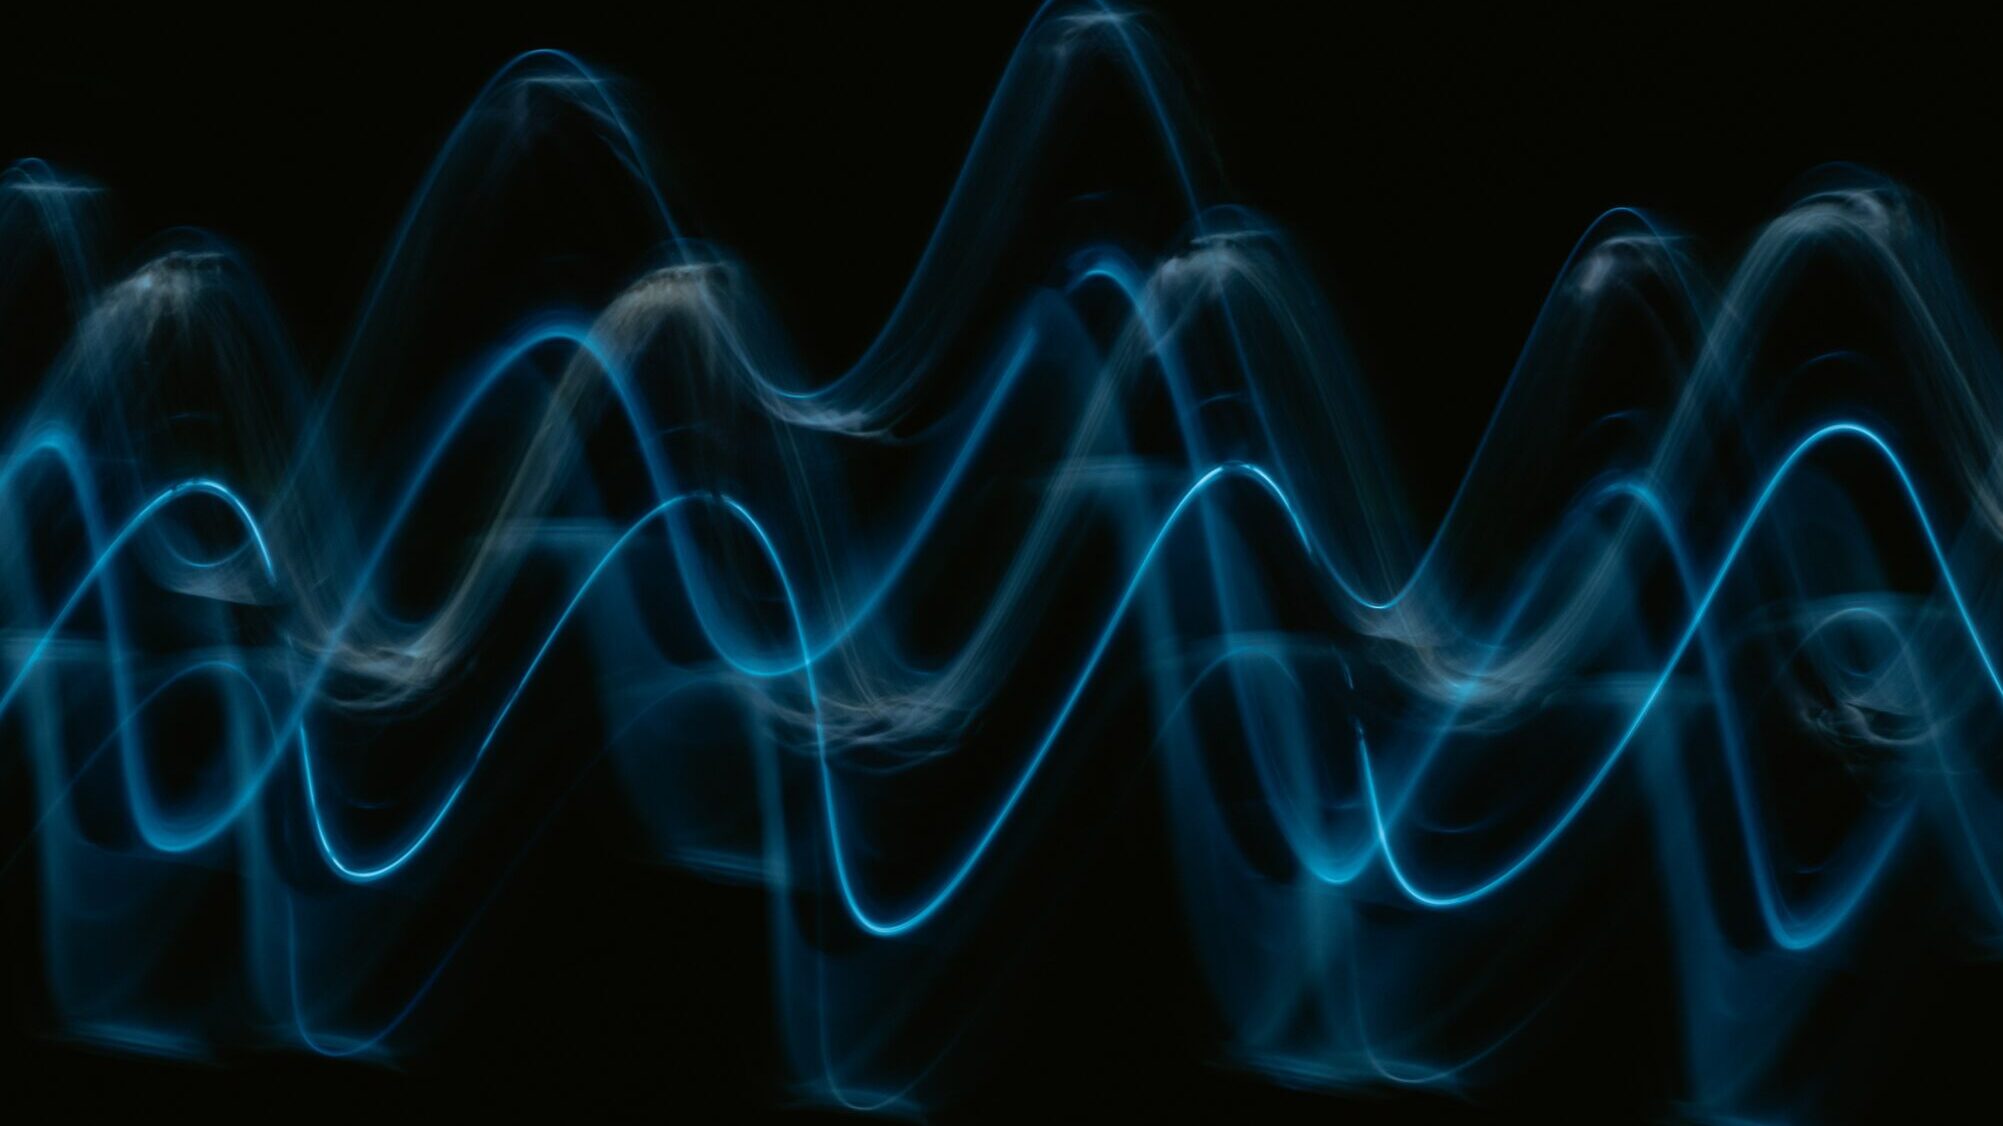 sound wave patterns